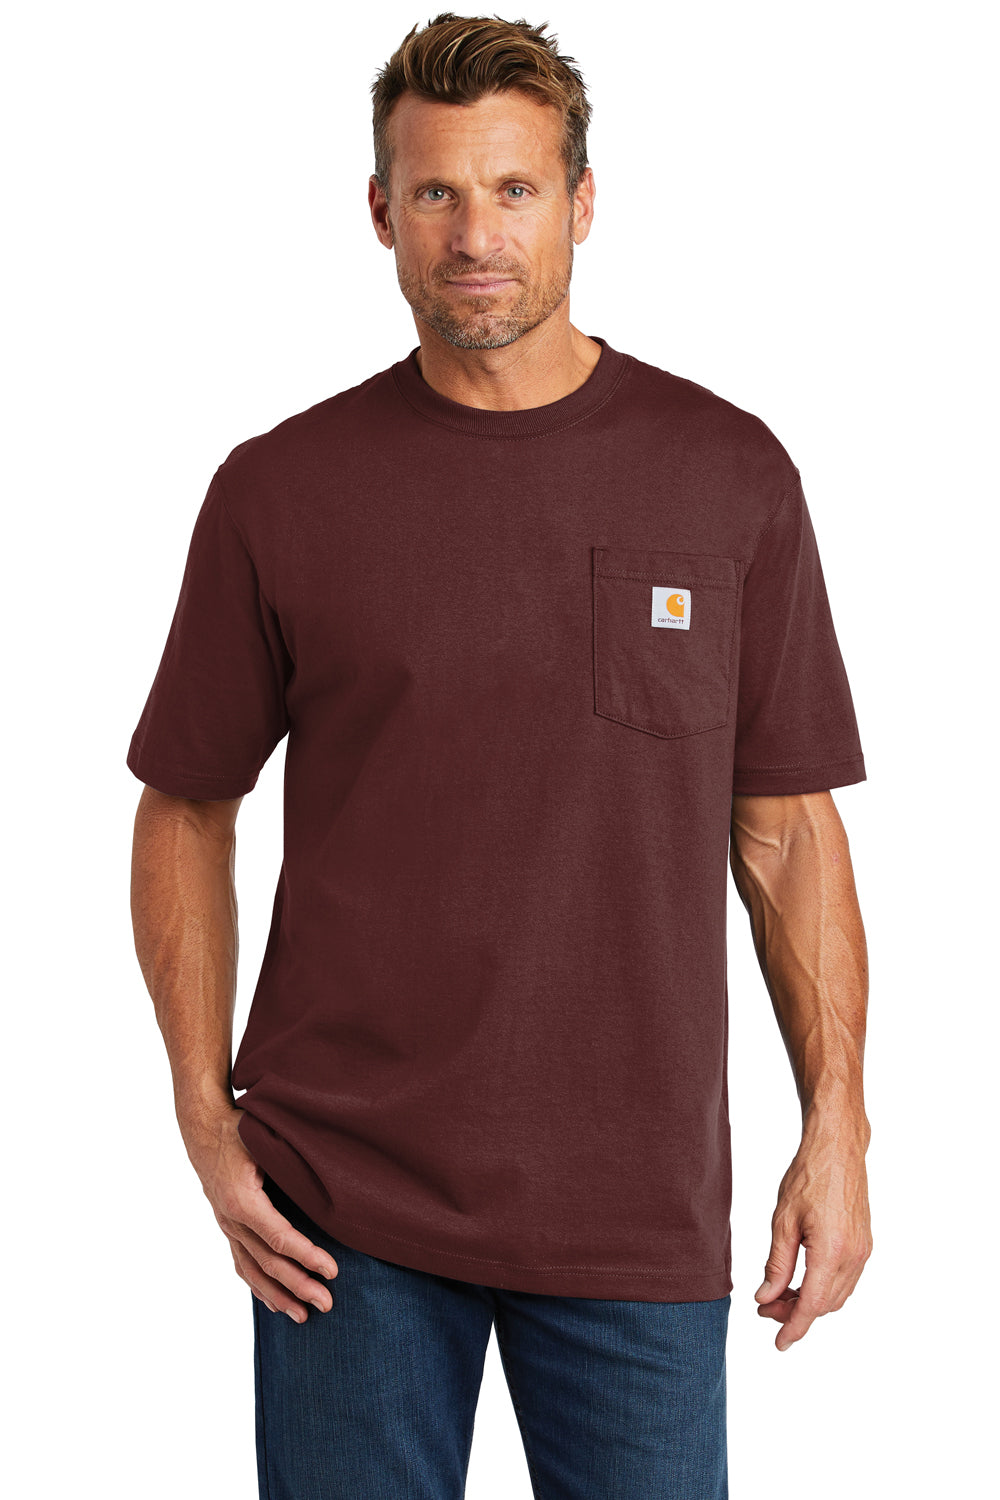 Carhartt CTK87 Mens Workwear Short Sleeve Crewneck T-Shirt w/ Pocket Port Red Front